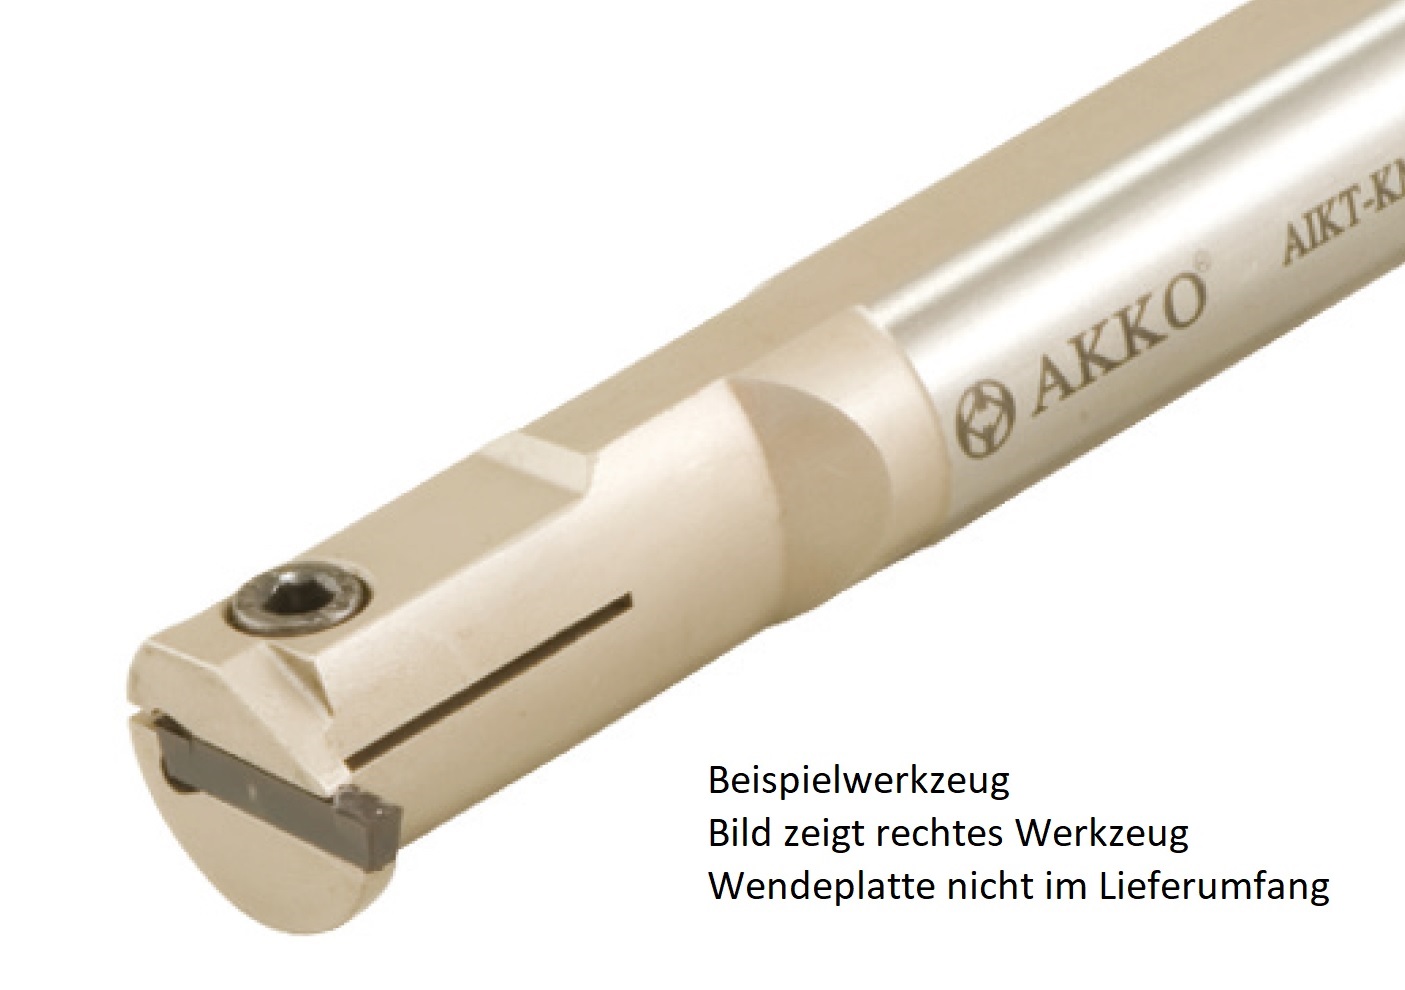 AKKO-Innen-Stechhalter, kompatibel mit Kennametal-Stechplatte A4.-3
Schaft-ø 20, ohne Innenkühlung, rechts